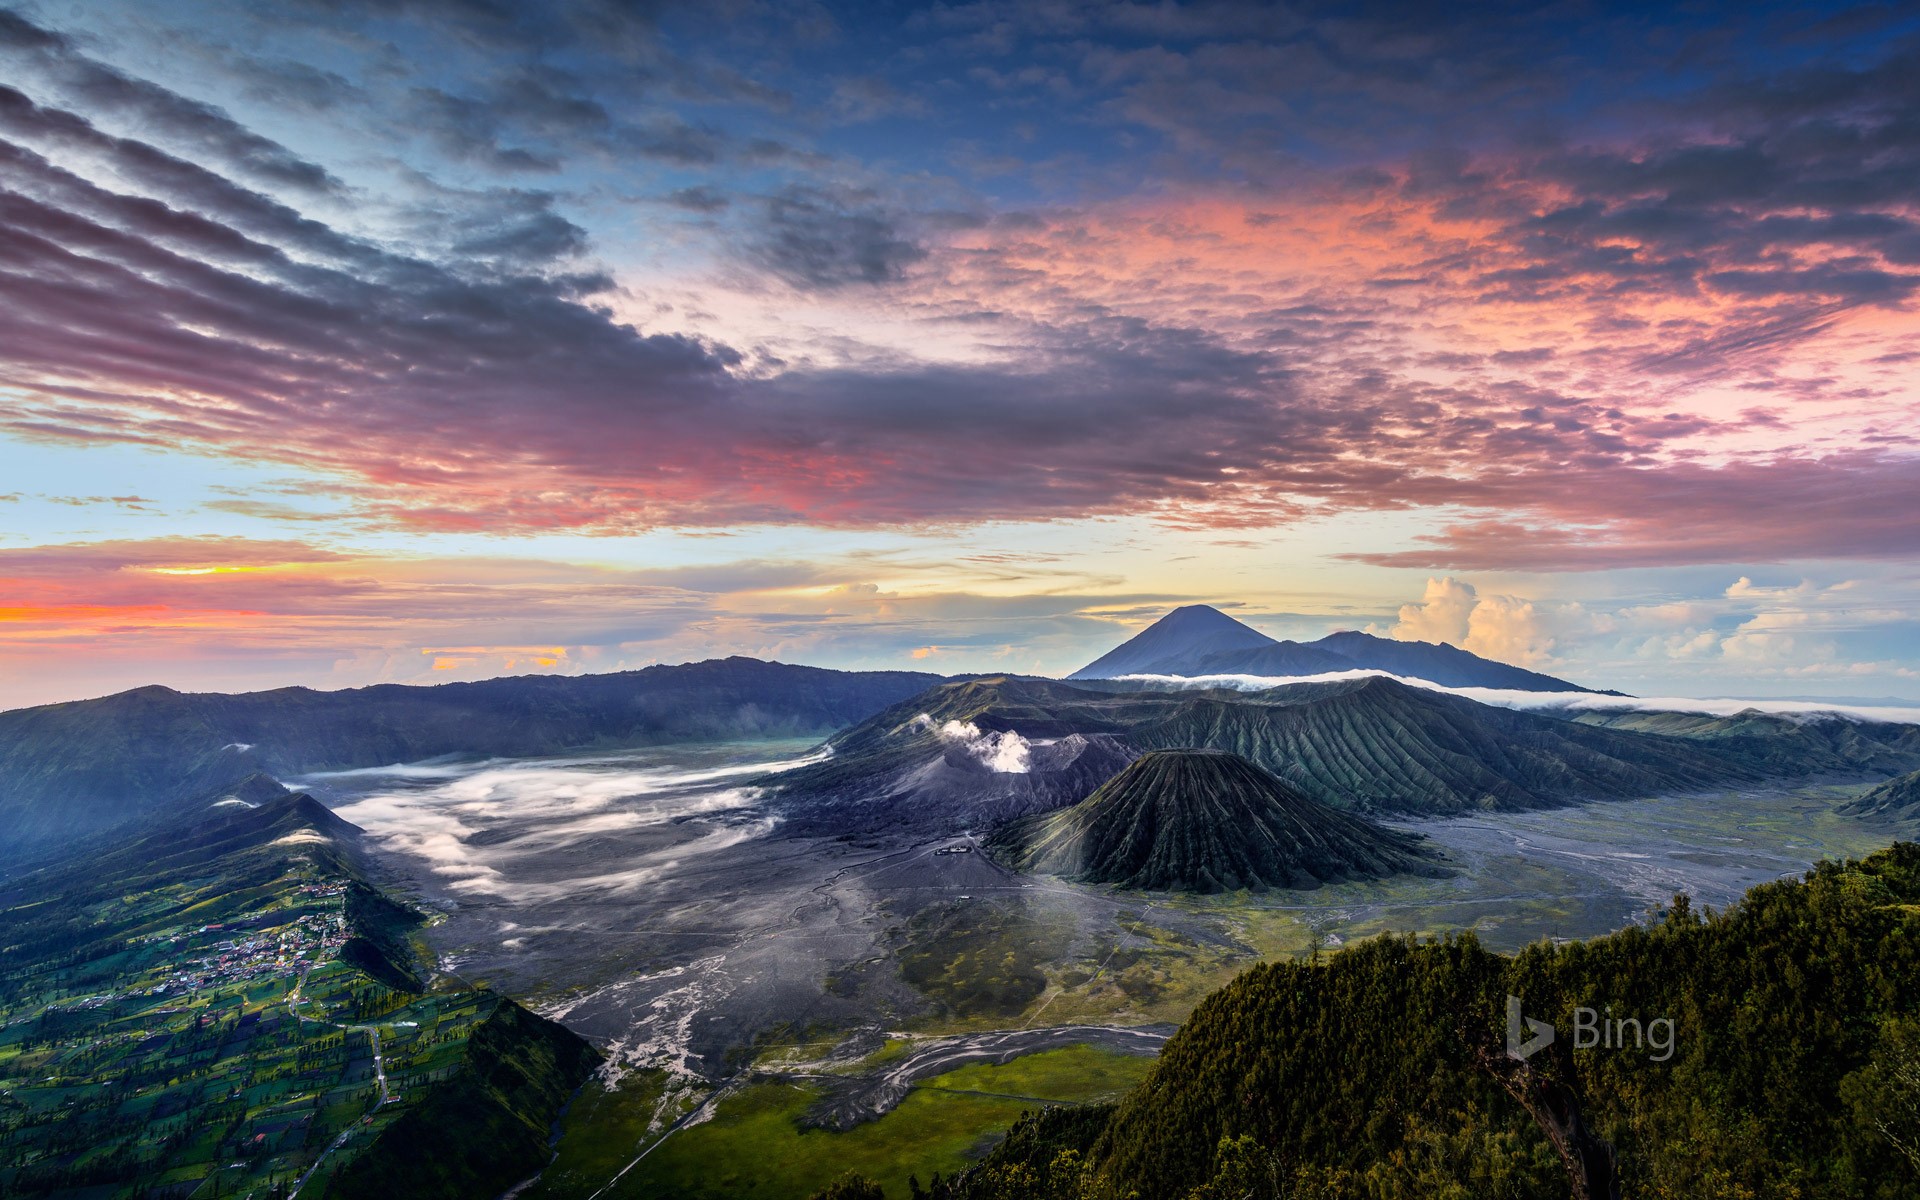 Smoldering Mount Bromo in East Java, Indonesia